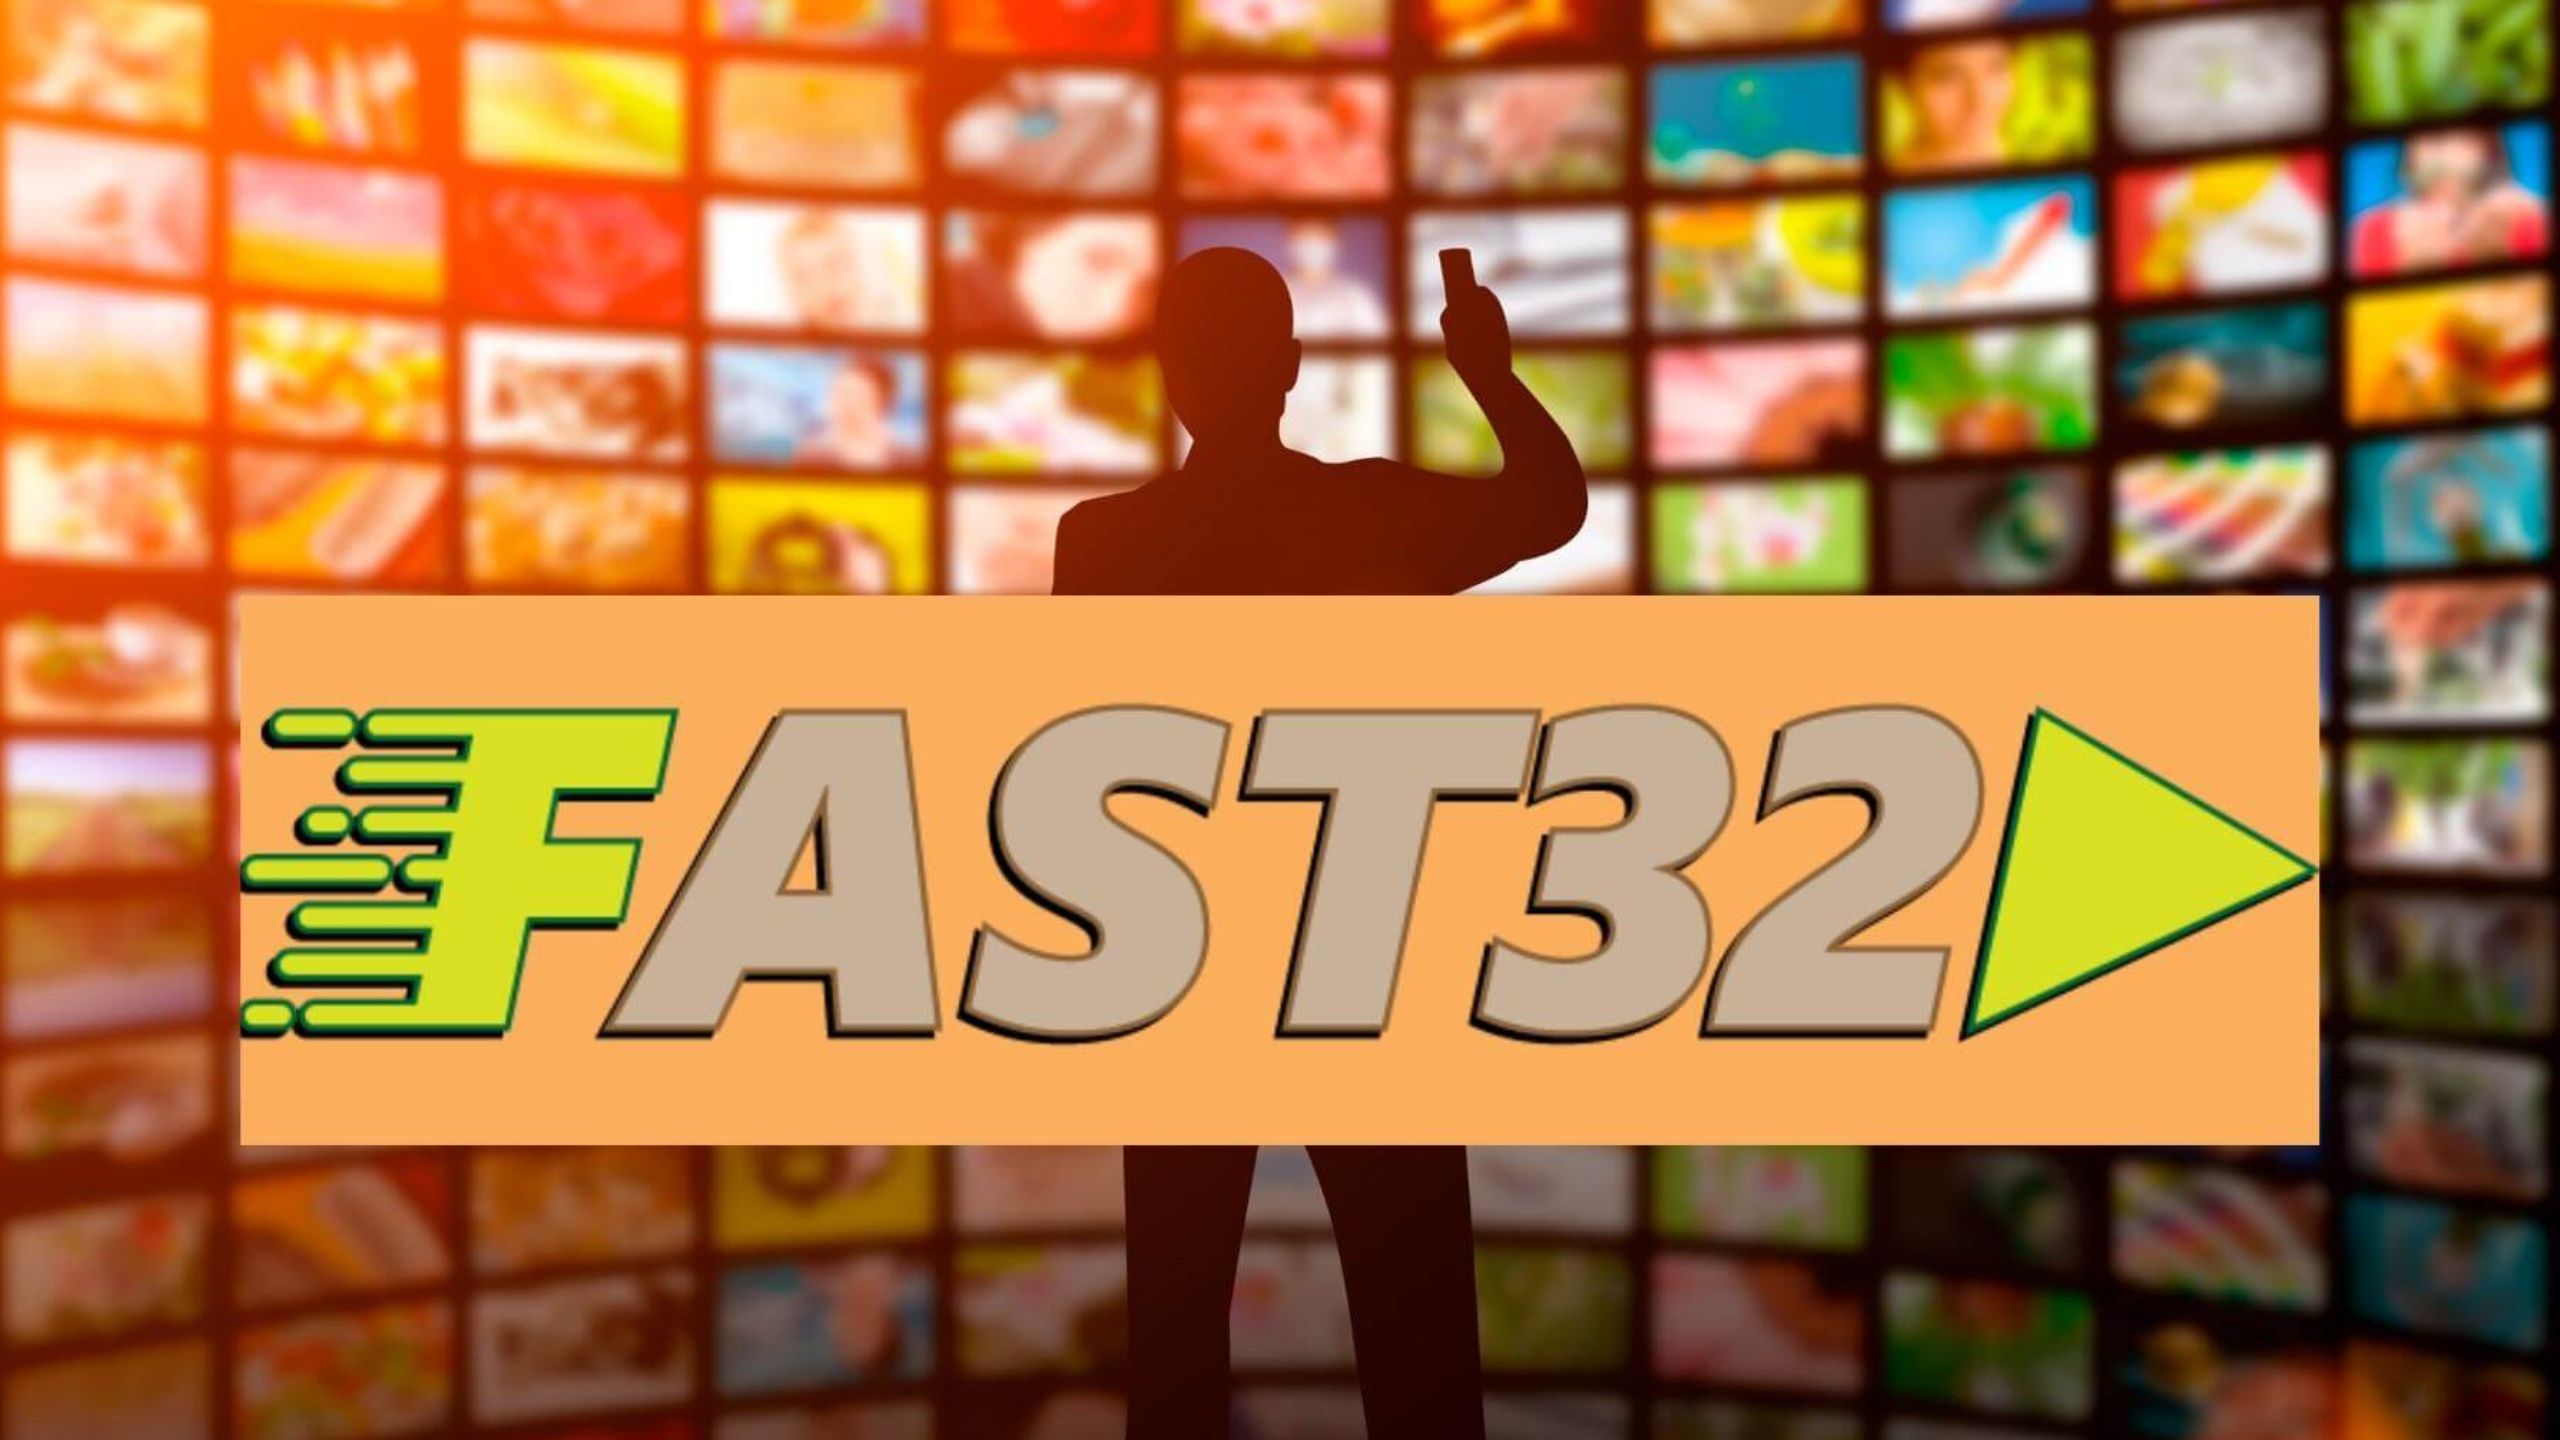 Fast32 Movies